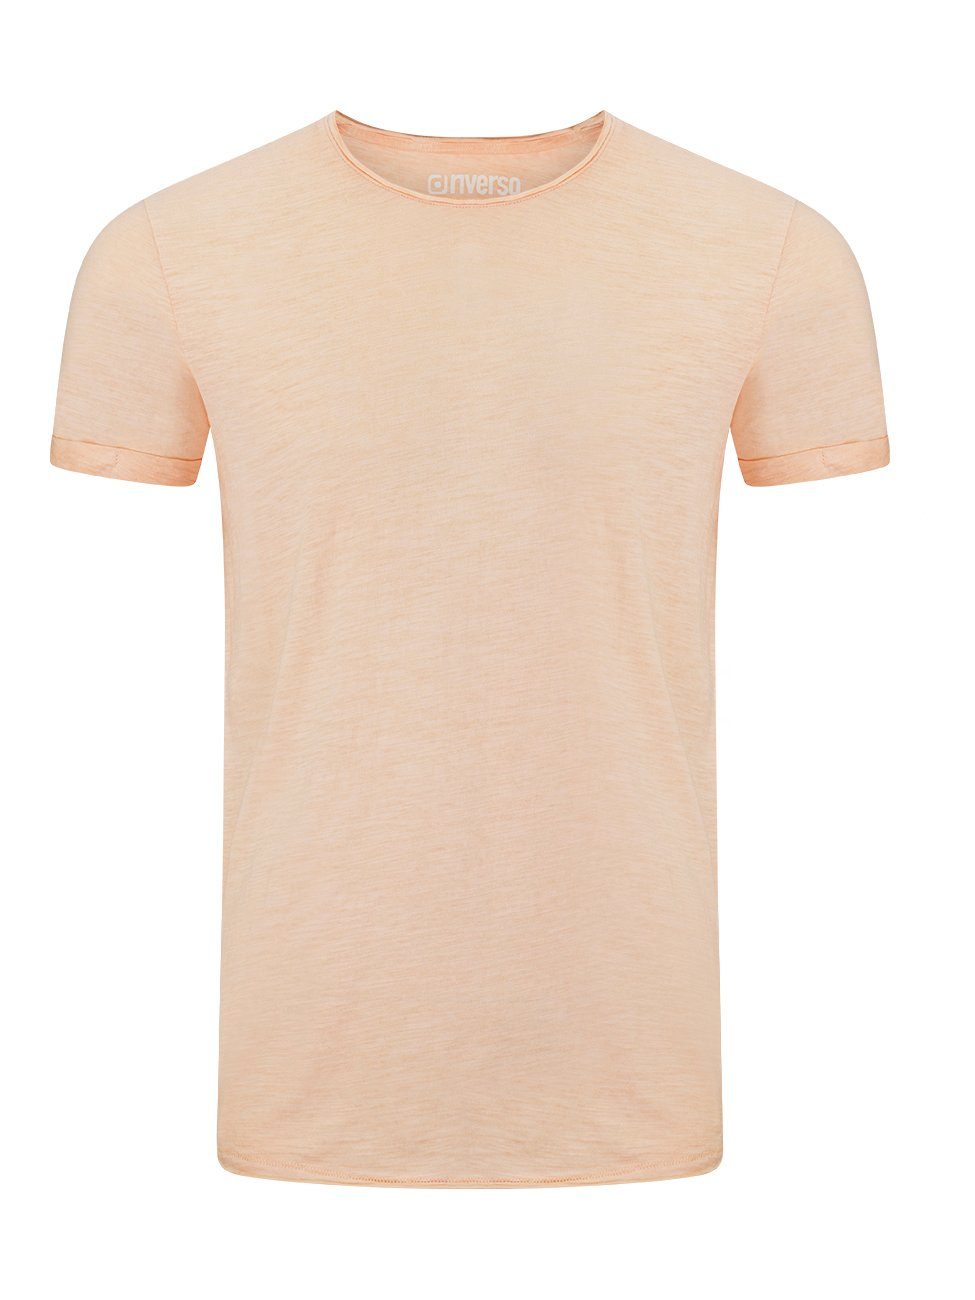 Rundhalsausschnitt Baumwolle Kurzarm Shirt T-Shirt riverso aus mit 100% Shirt Pack Fit Herren RIVMatteo 4 Regular (4-tlg) Basic Tee